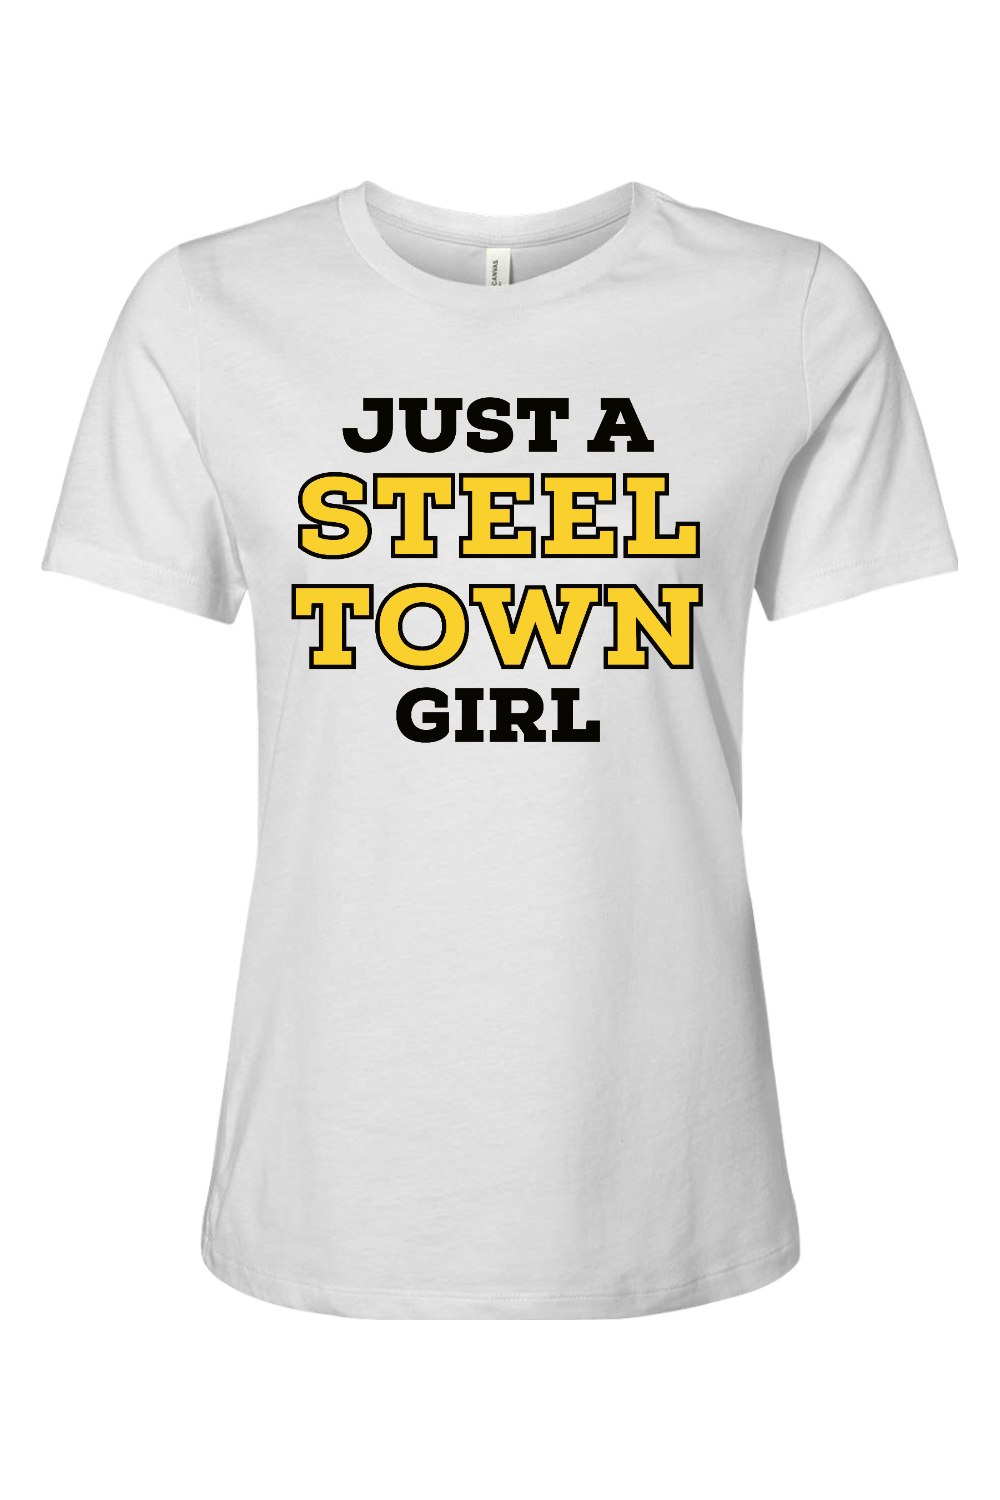 Just a Steel Town Girl - Ladies Tee - Yinzylvania